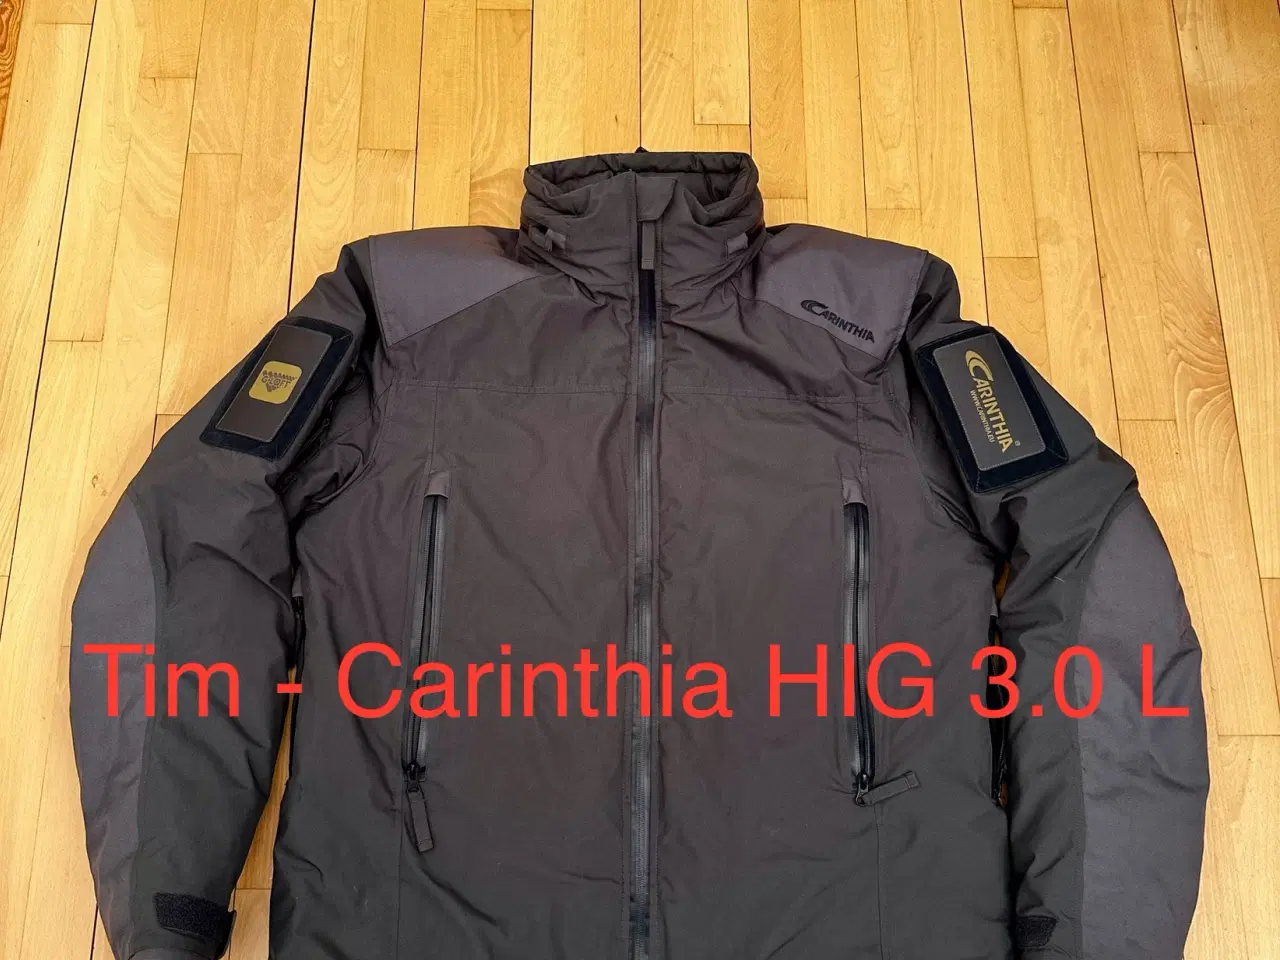 Billede 11 - Carinthia HIG 3.0 L 